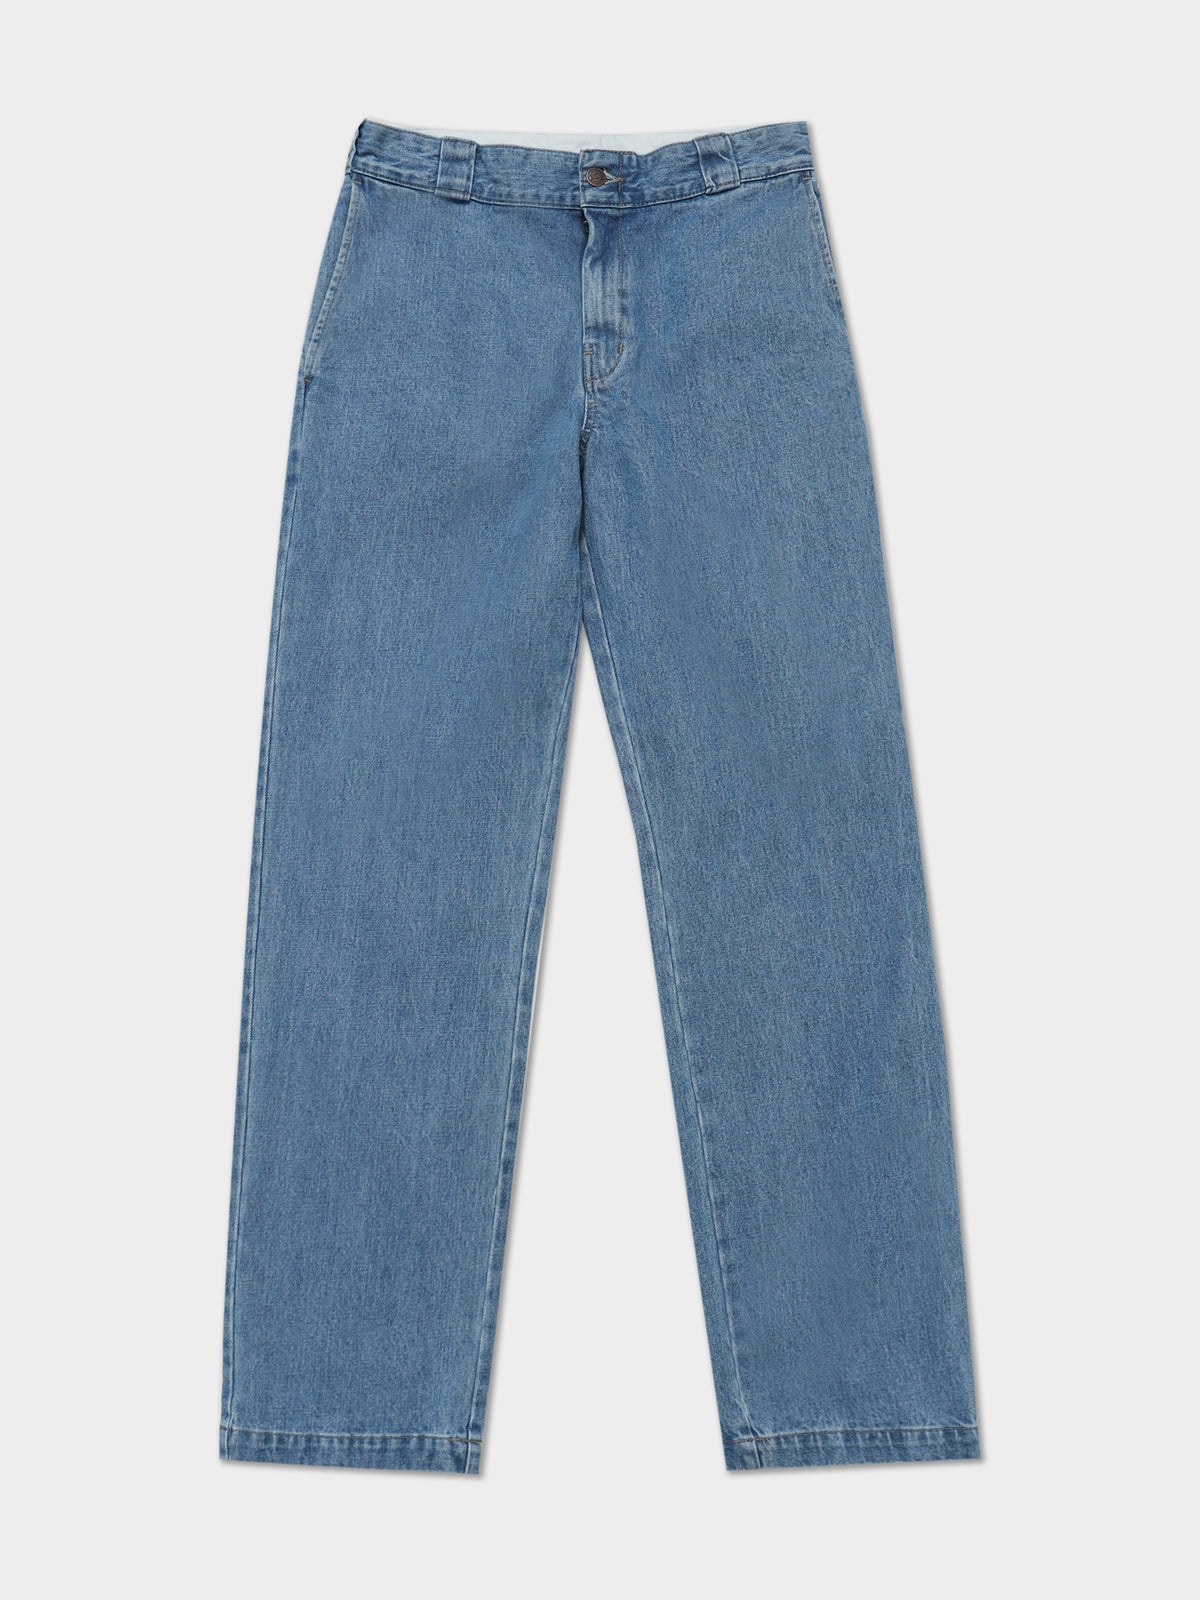 875 Denim Jeans in Light Indigo